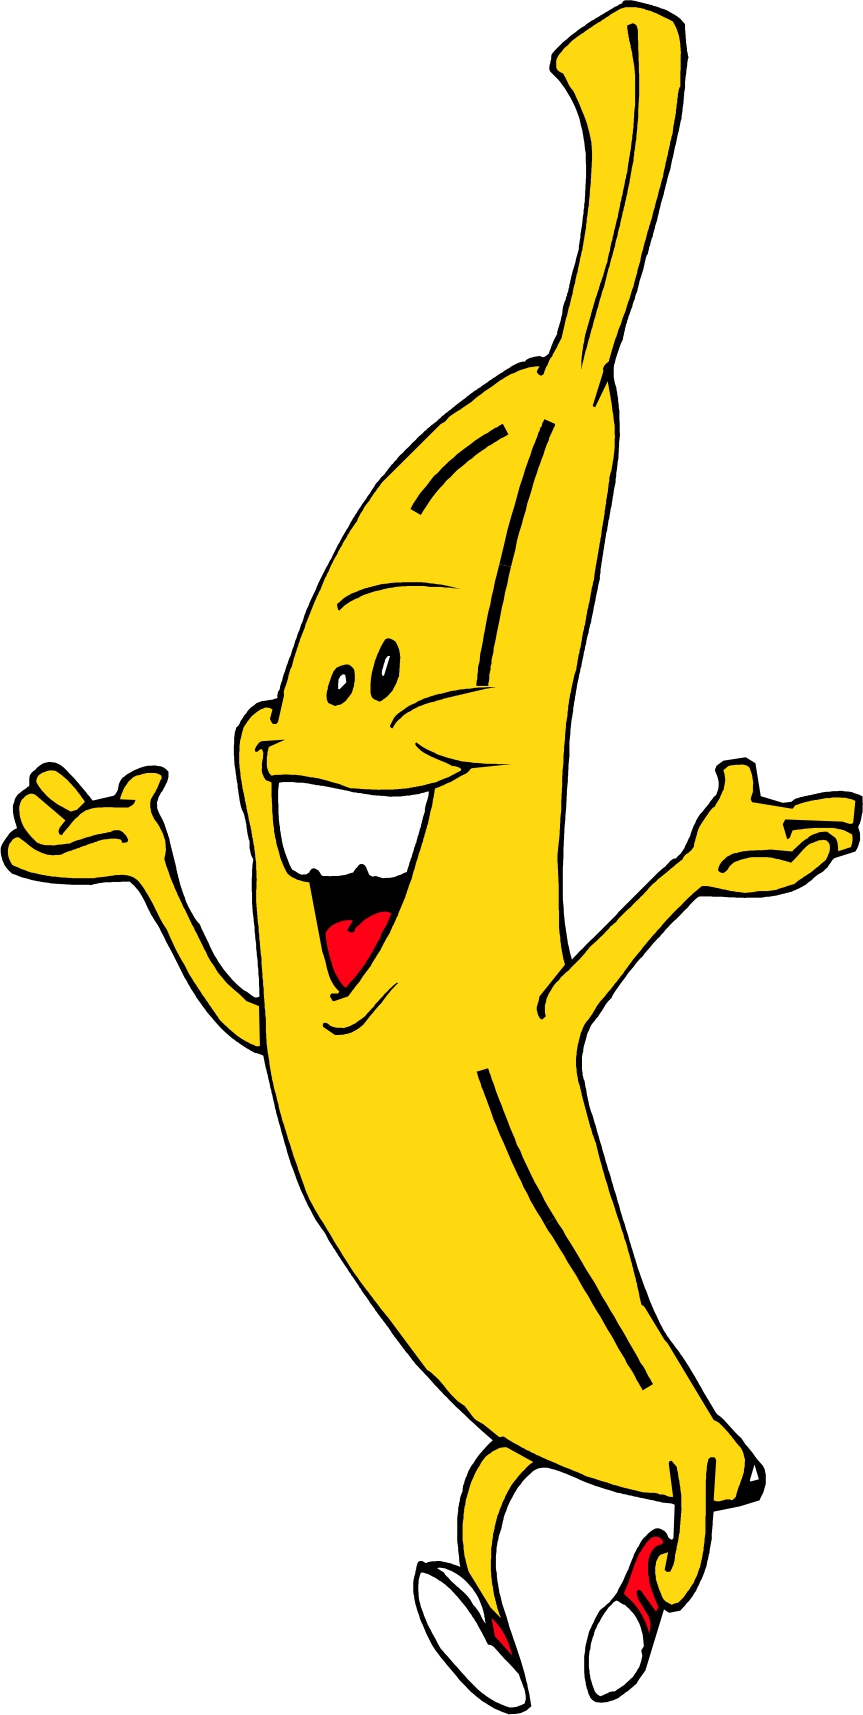 cartoon-fruit-banana-06.jpg